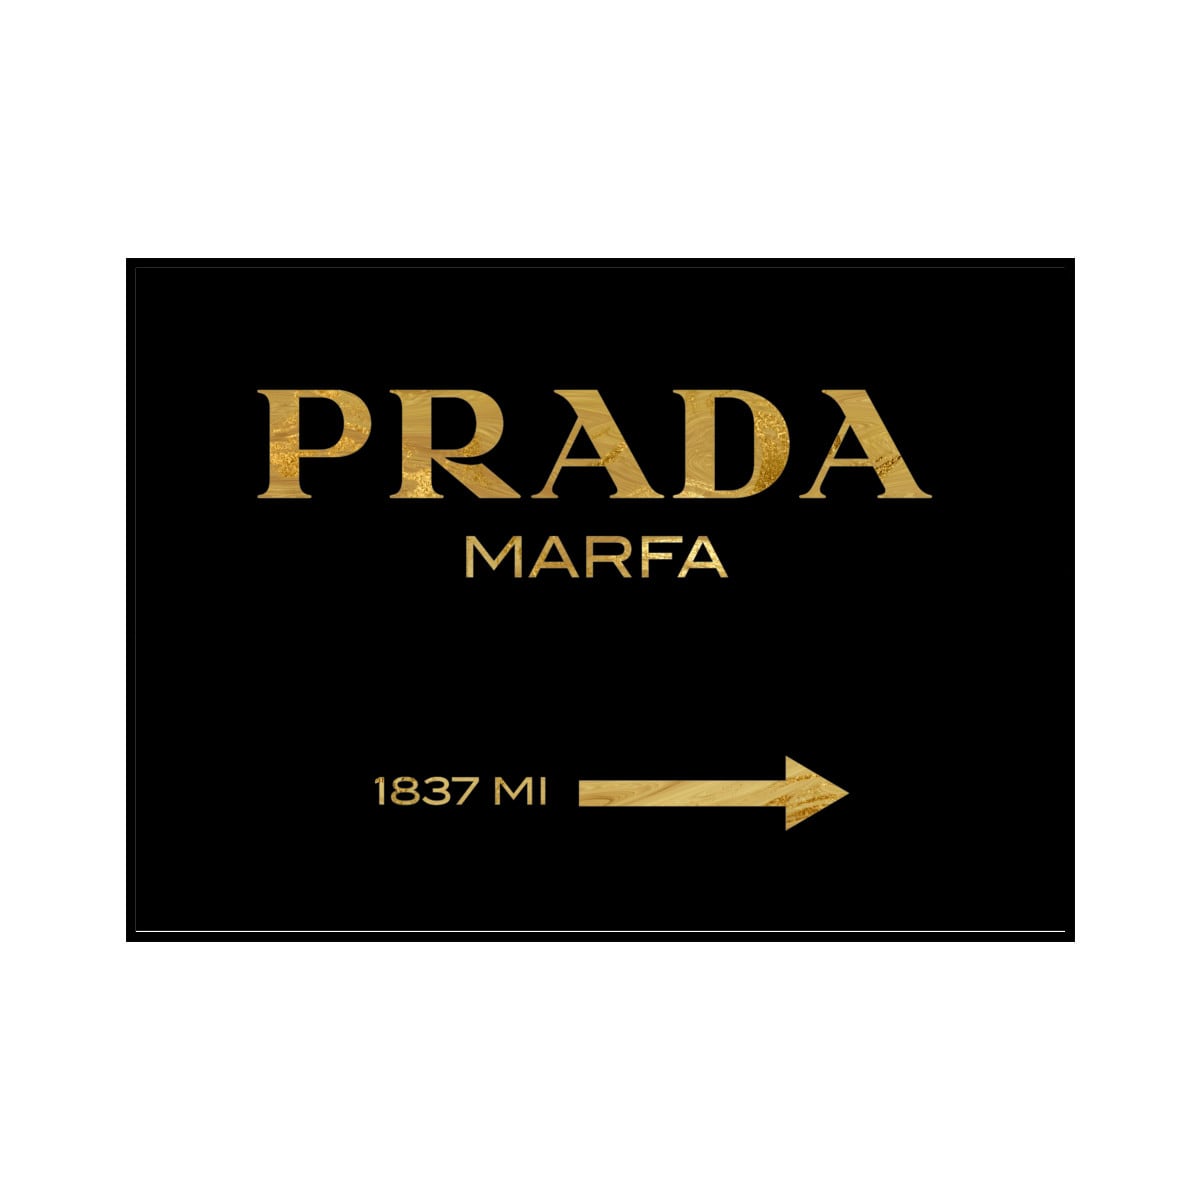 PRADA MARFA 1837 MI" Gold marble & Black - POSTER [SD-000564] A2サイズ ポスター単品  | State of the Art Design